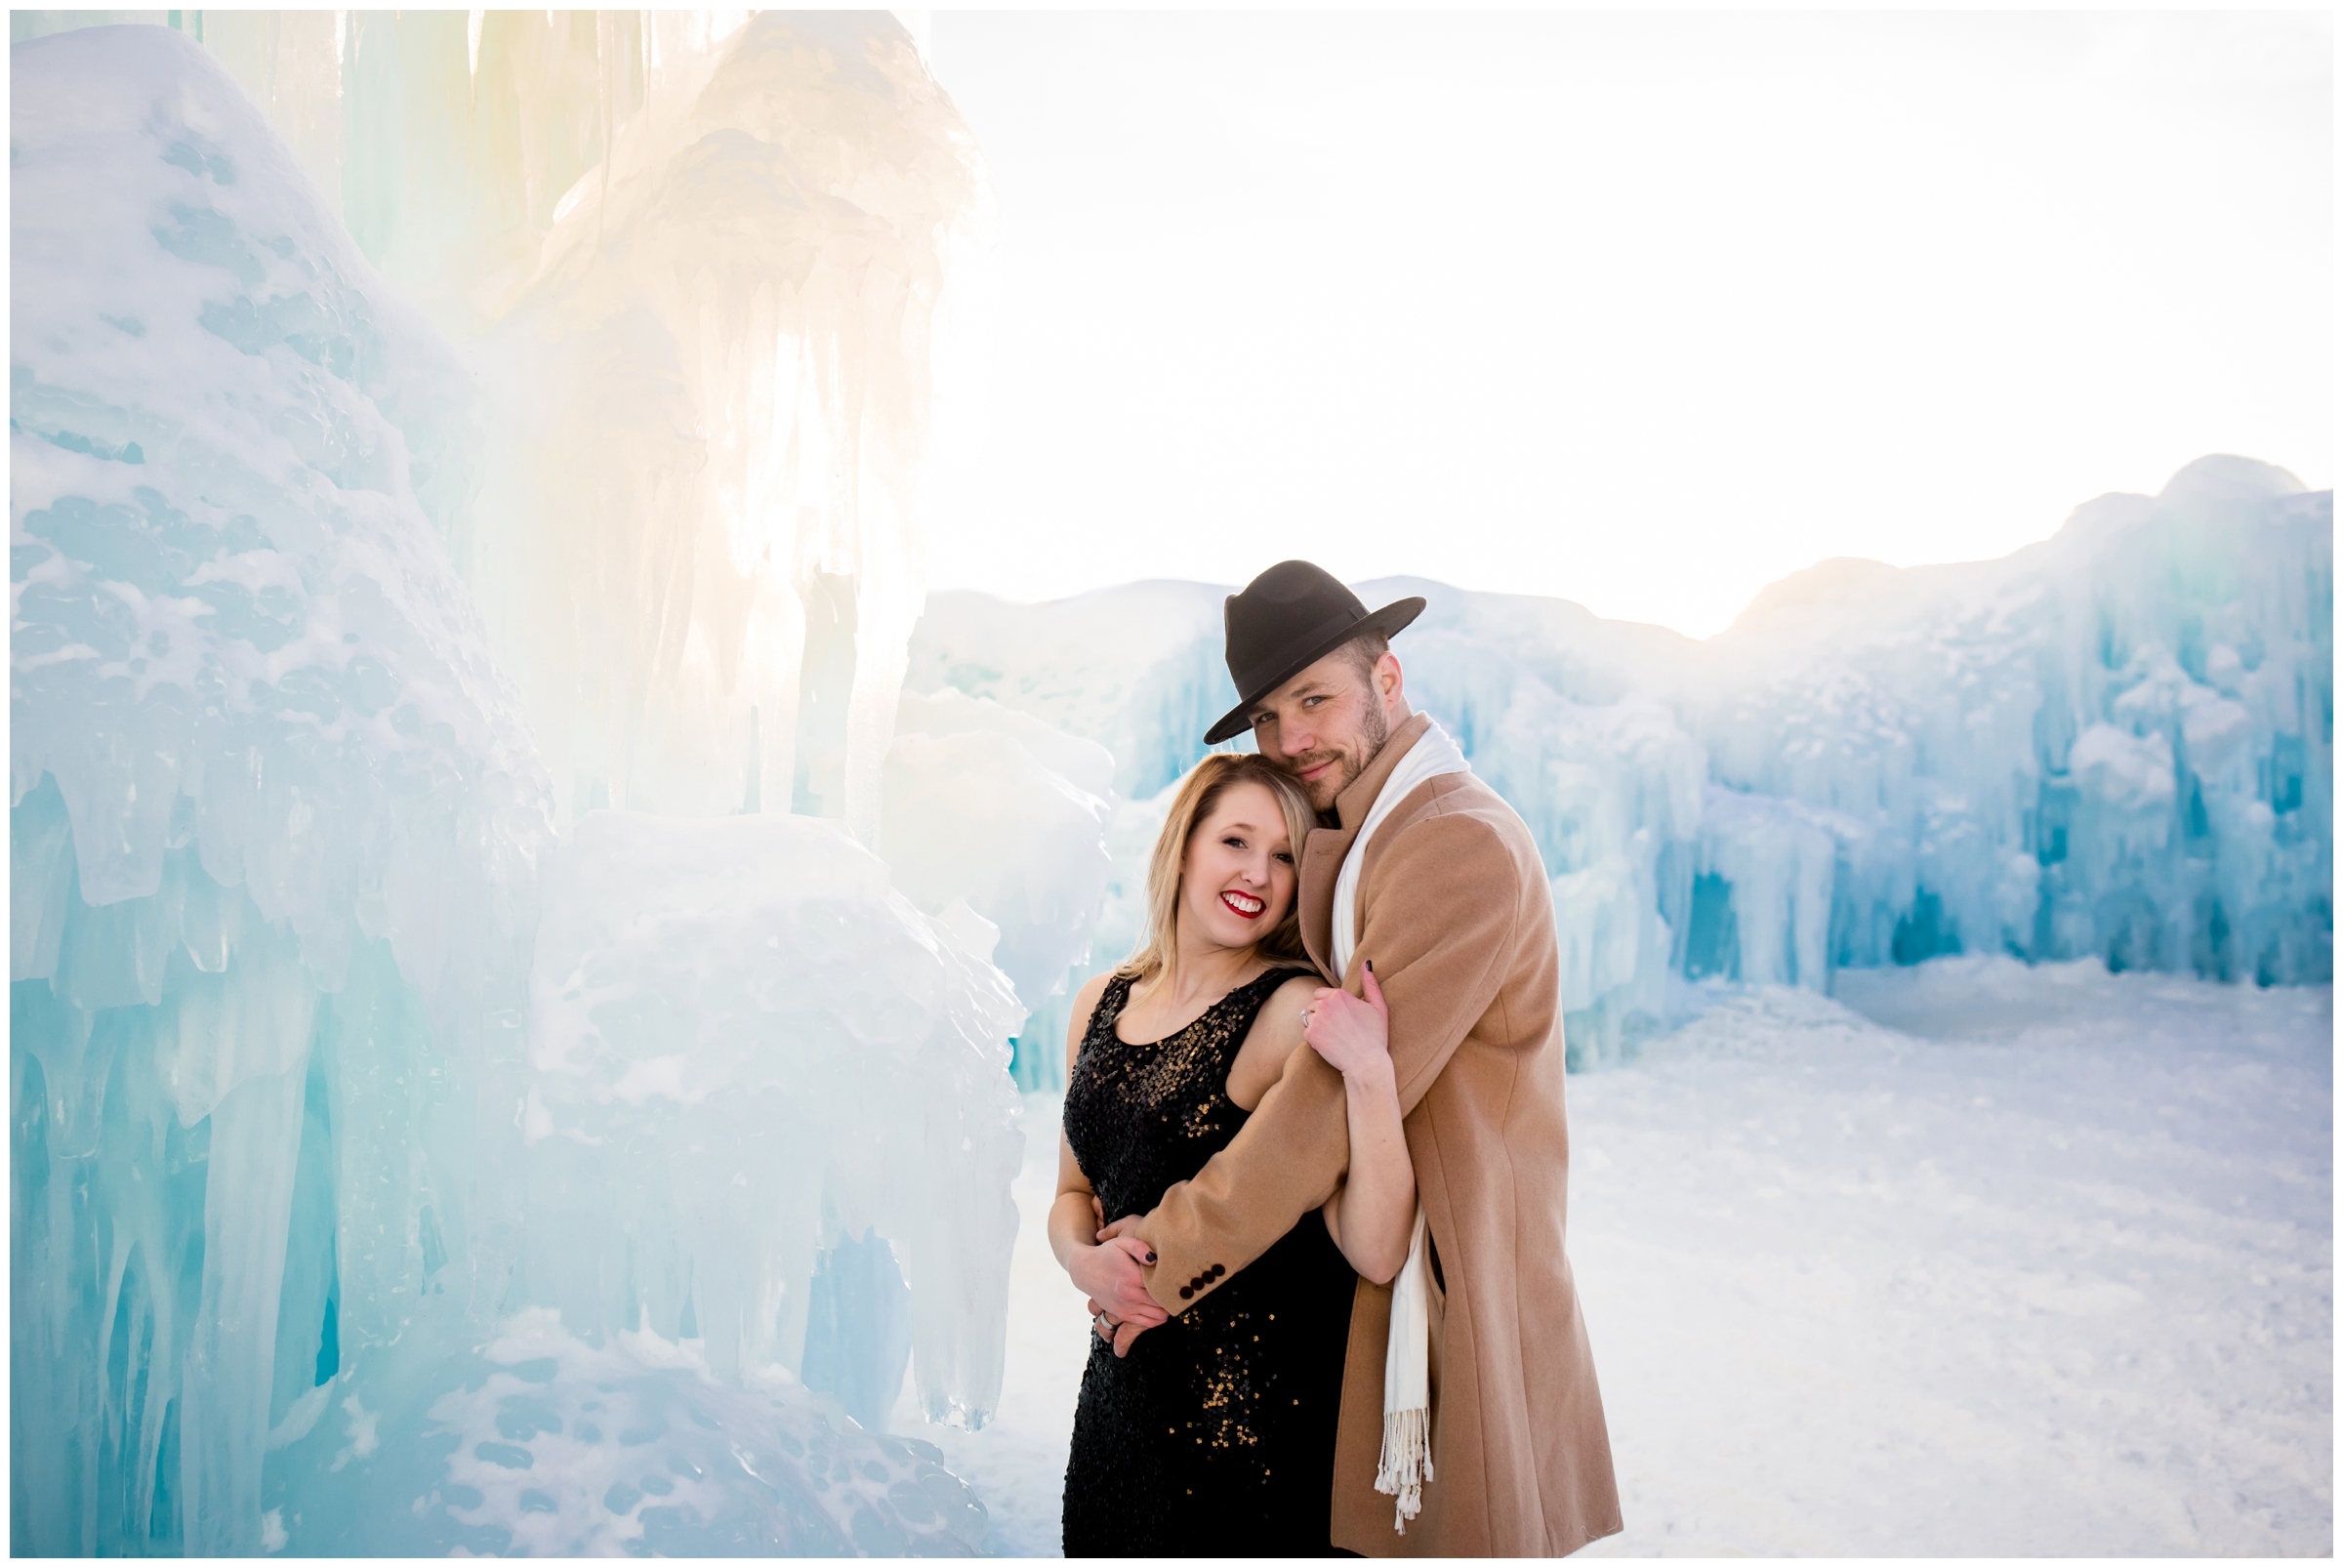 Breckenridge engagement photographs at the Colorado ice castles. Winter couple's portraits by Denver photographer Plum Pretty Photography.